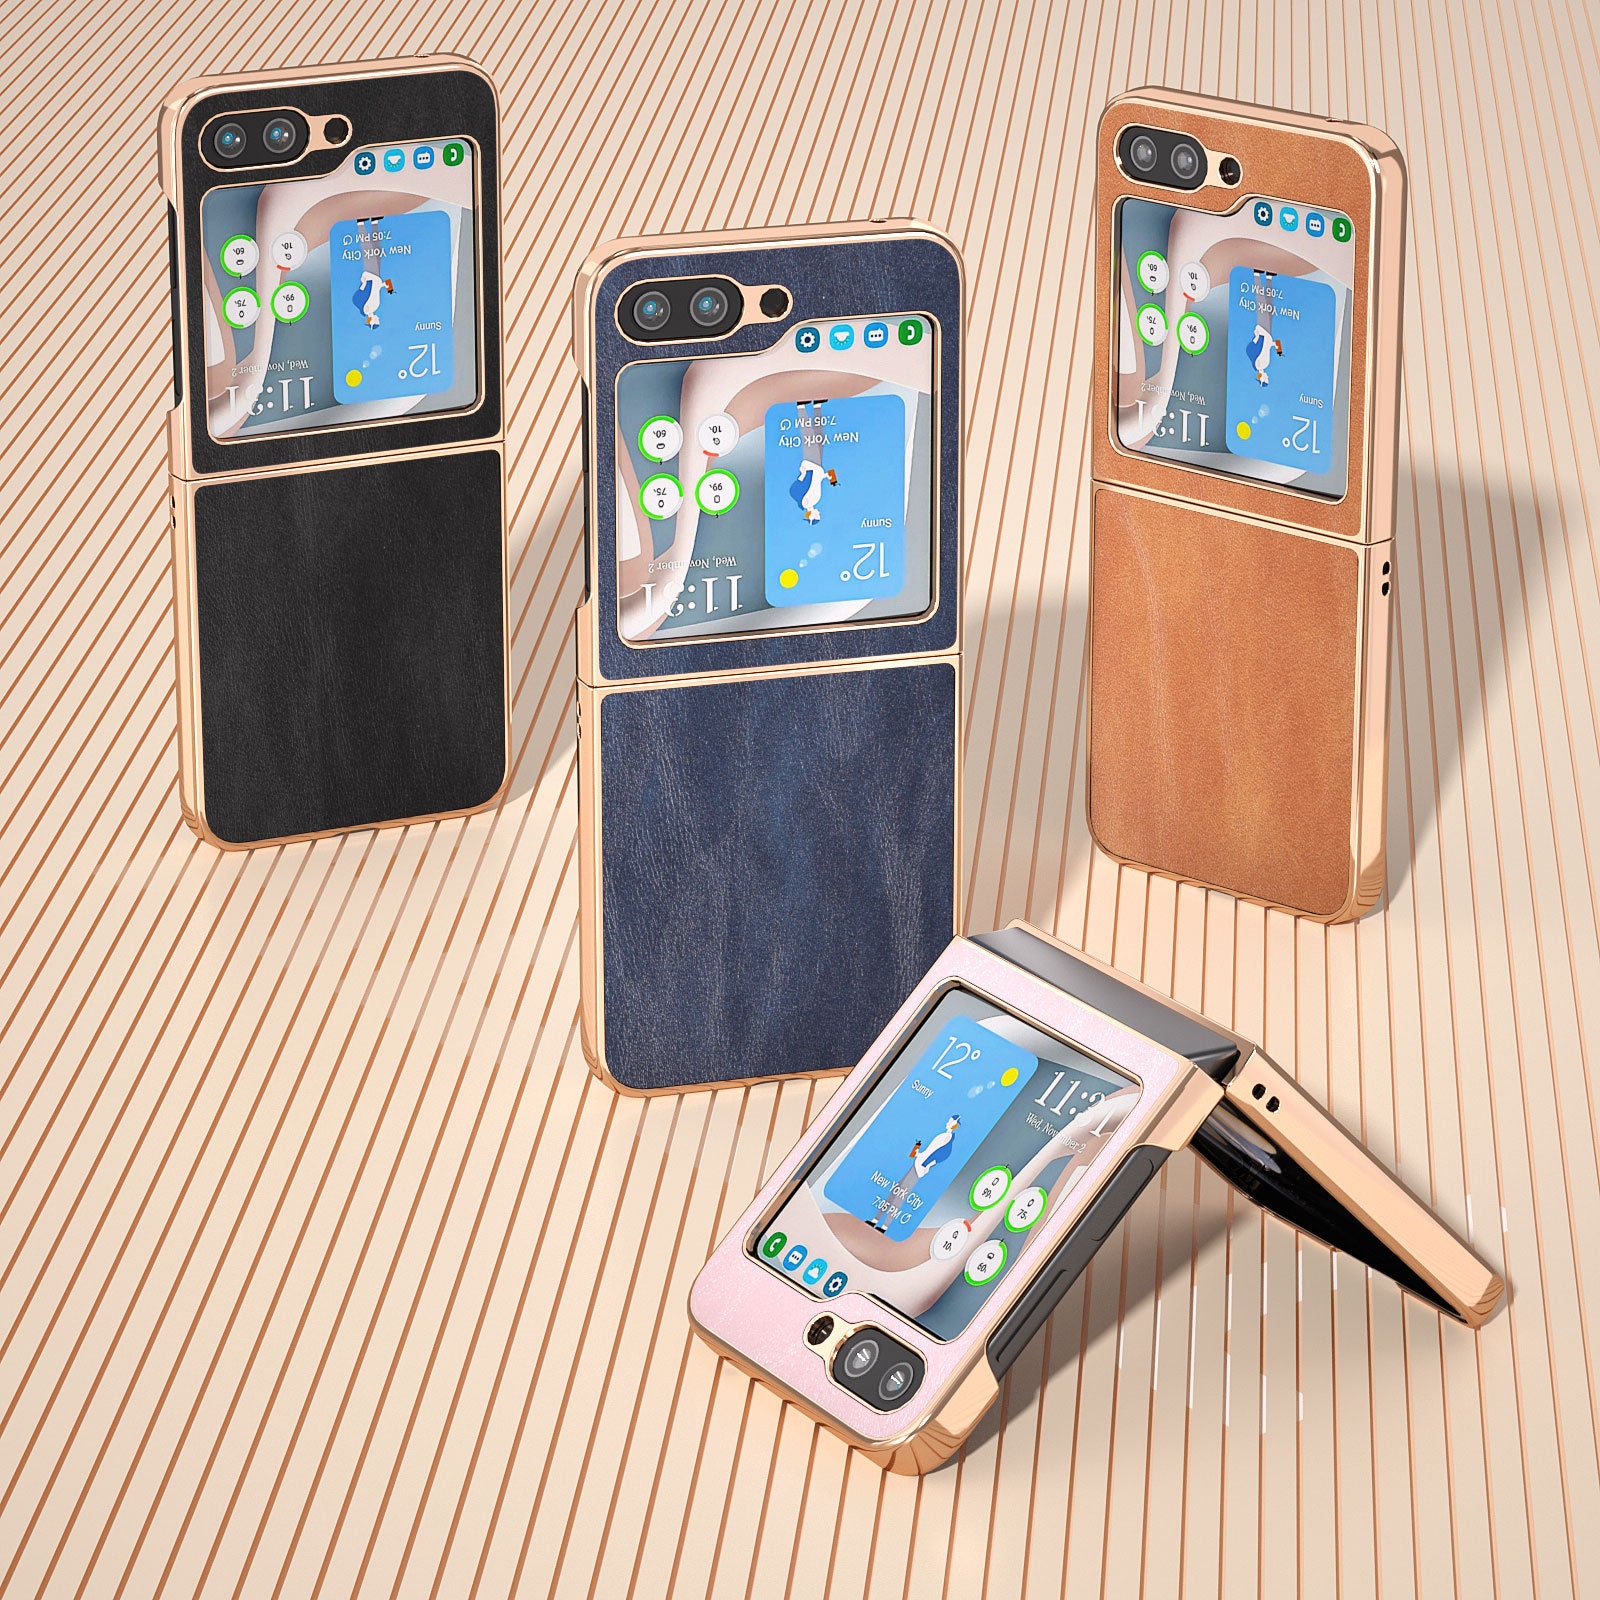 Buy Cute Cartoon 3D Doll Chain Phone Case for Samsung Galaxy Z Flip 3 4 5G  Zflip3 Zflip4 Flip3 Flip4 Cover Online in India 